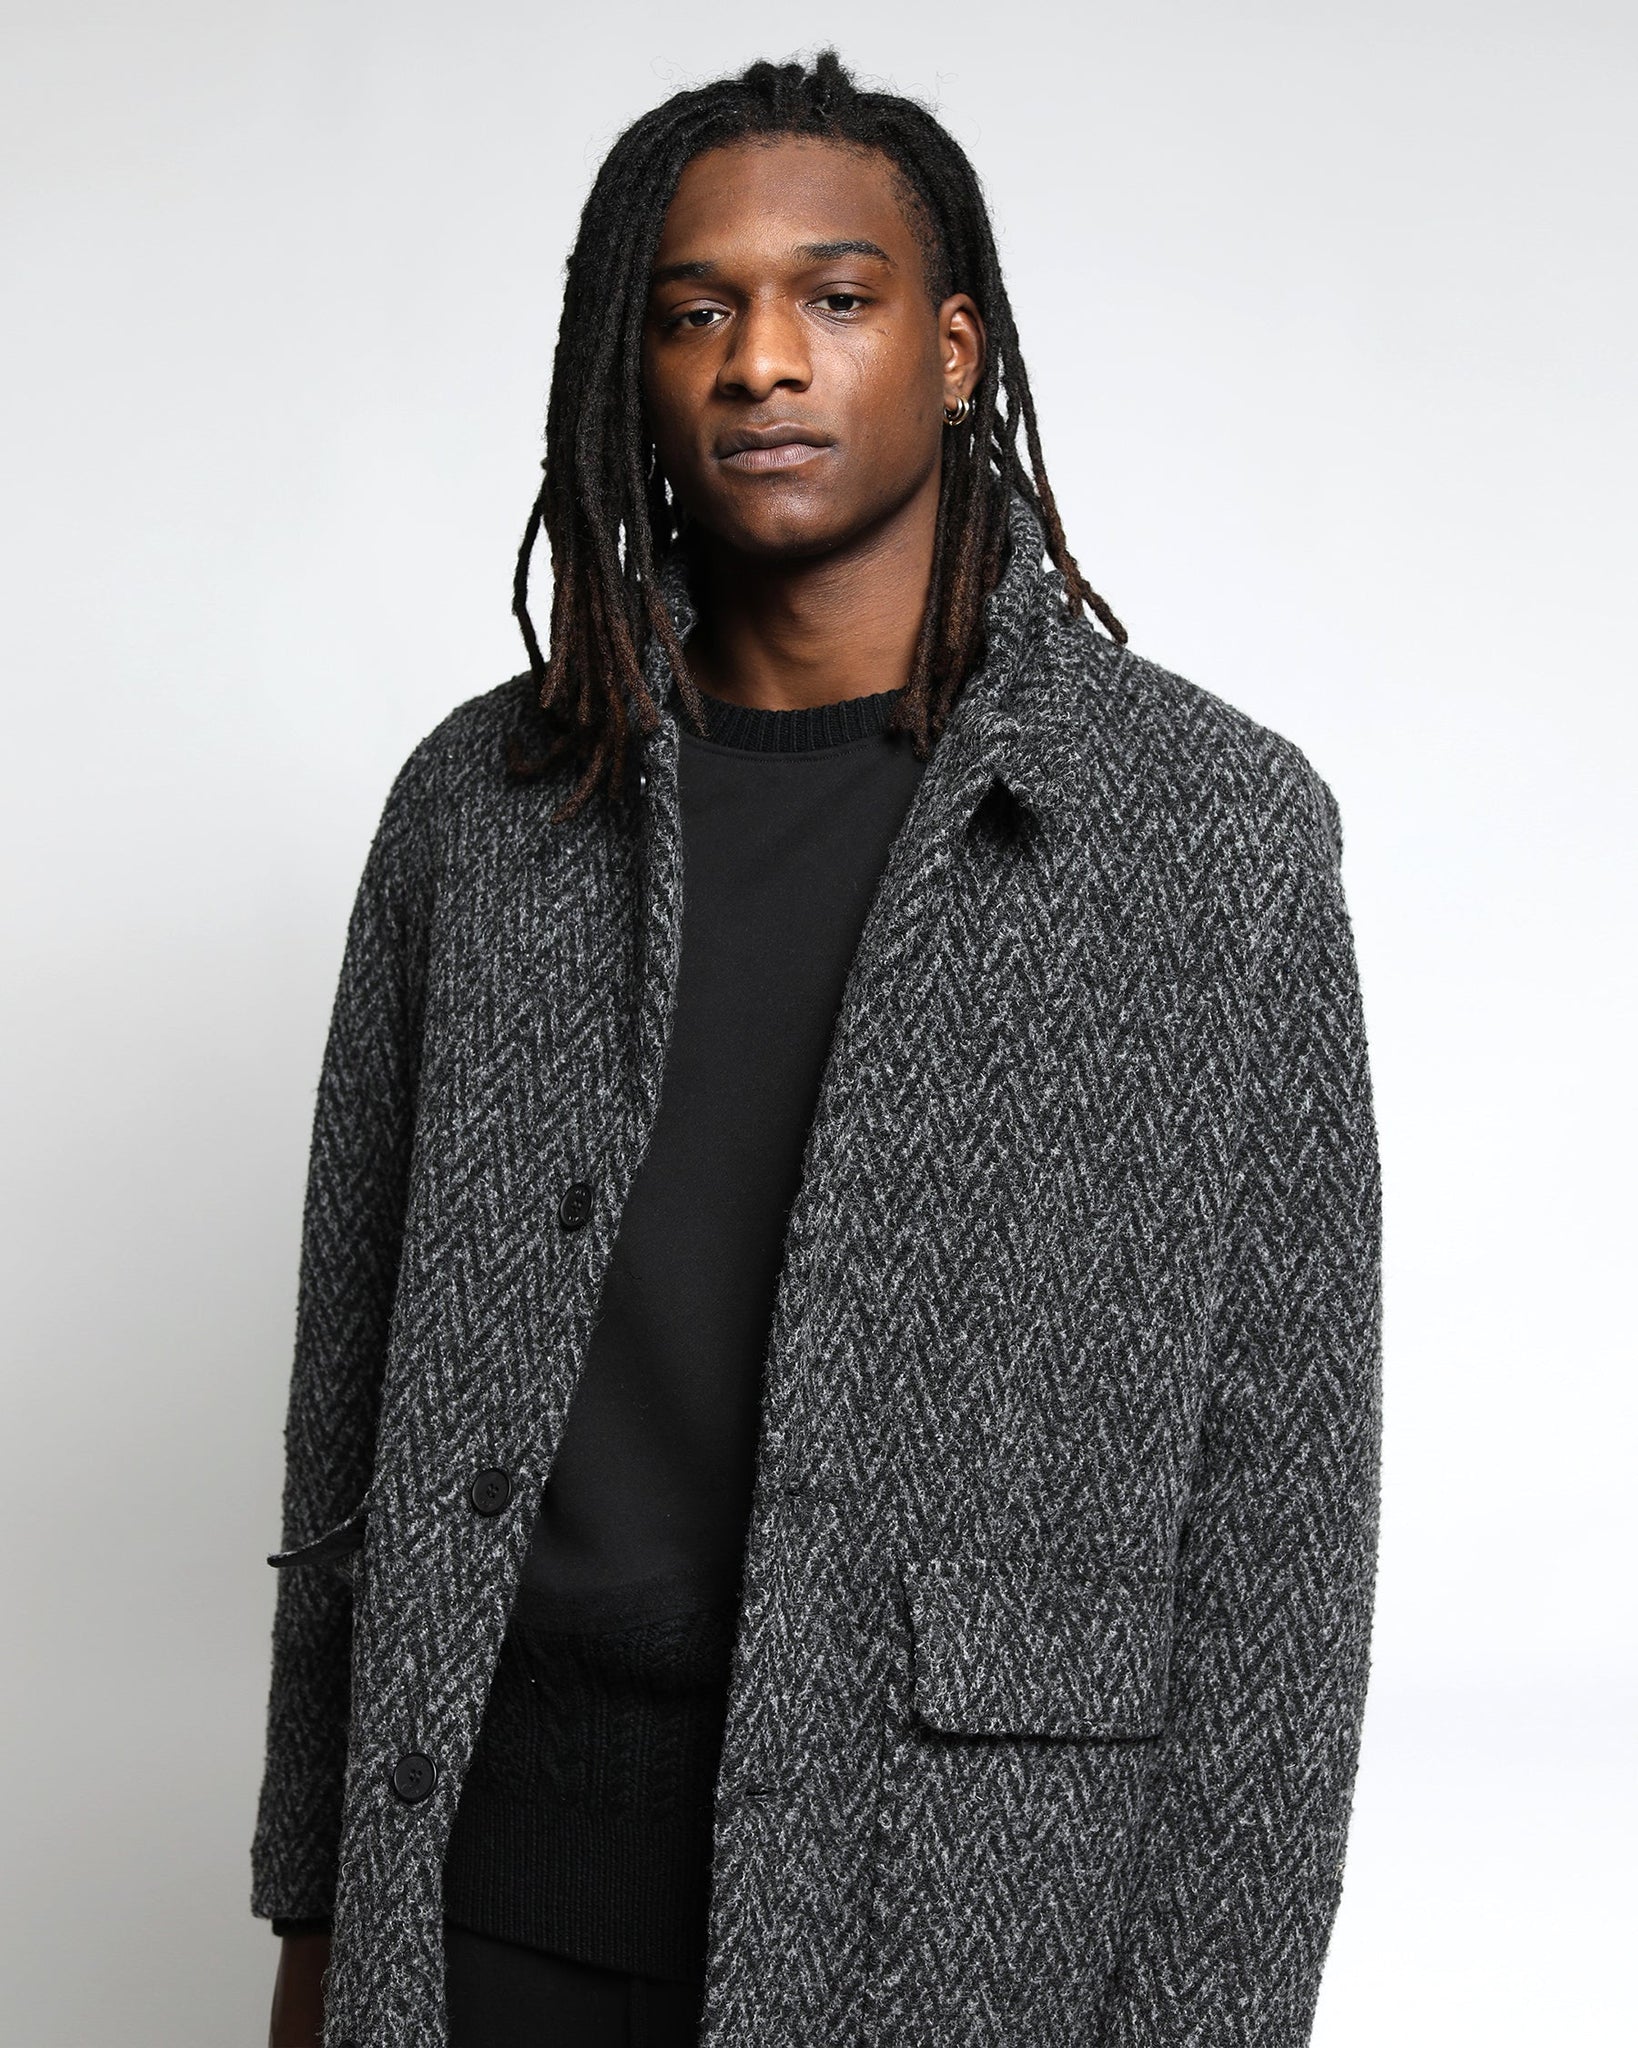 Drummond Chevron Wool Overcoat Jacket (FINAL SALE) - twentytees